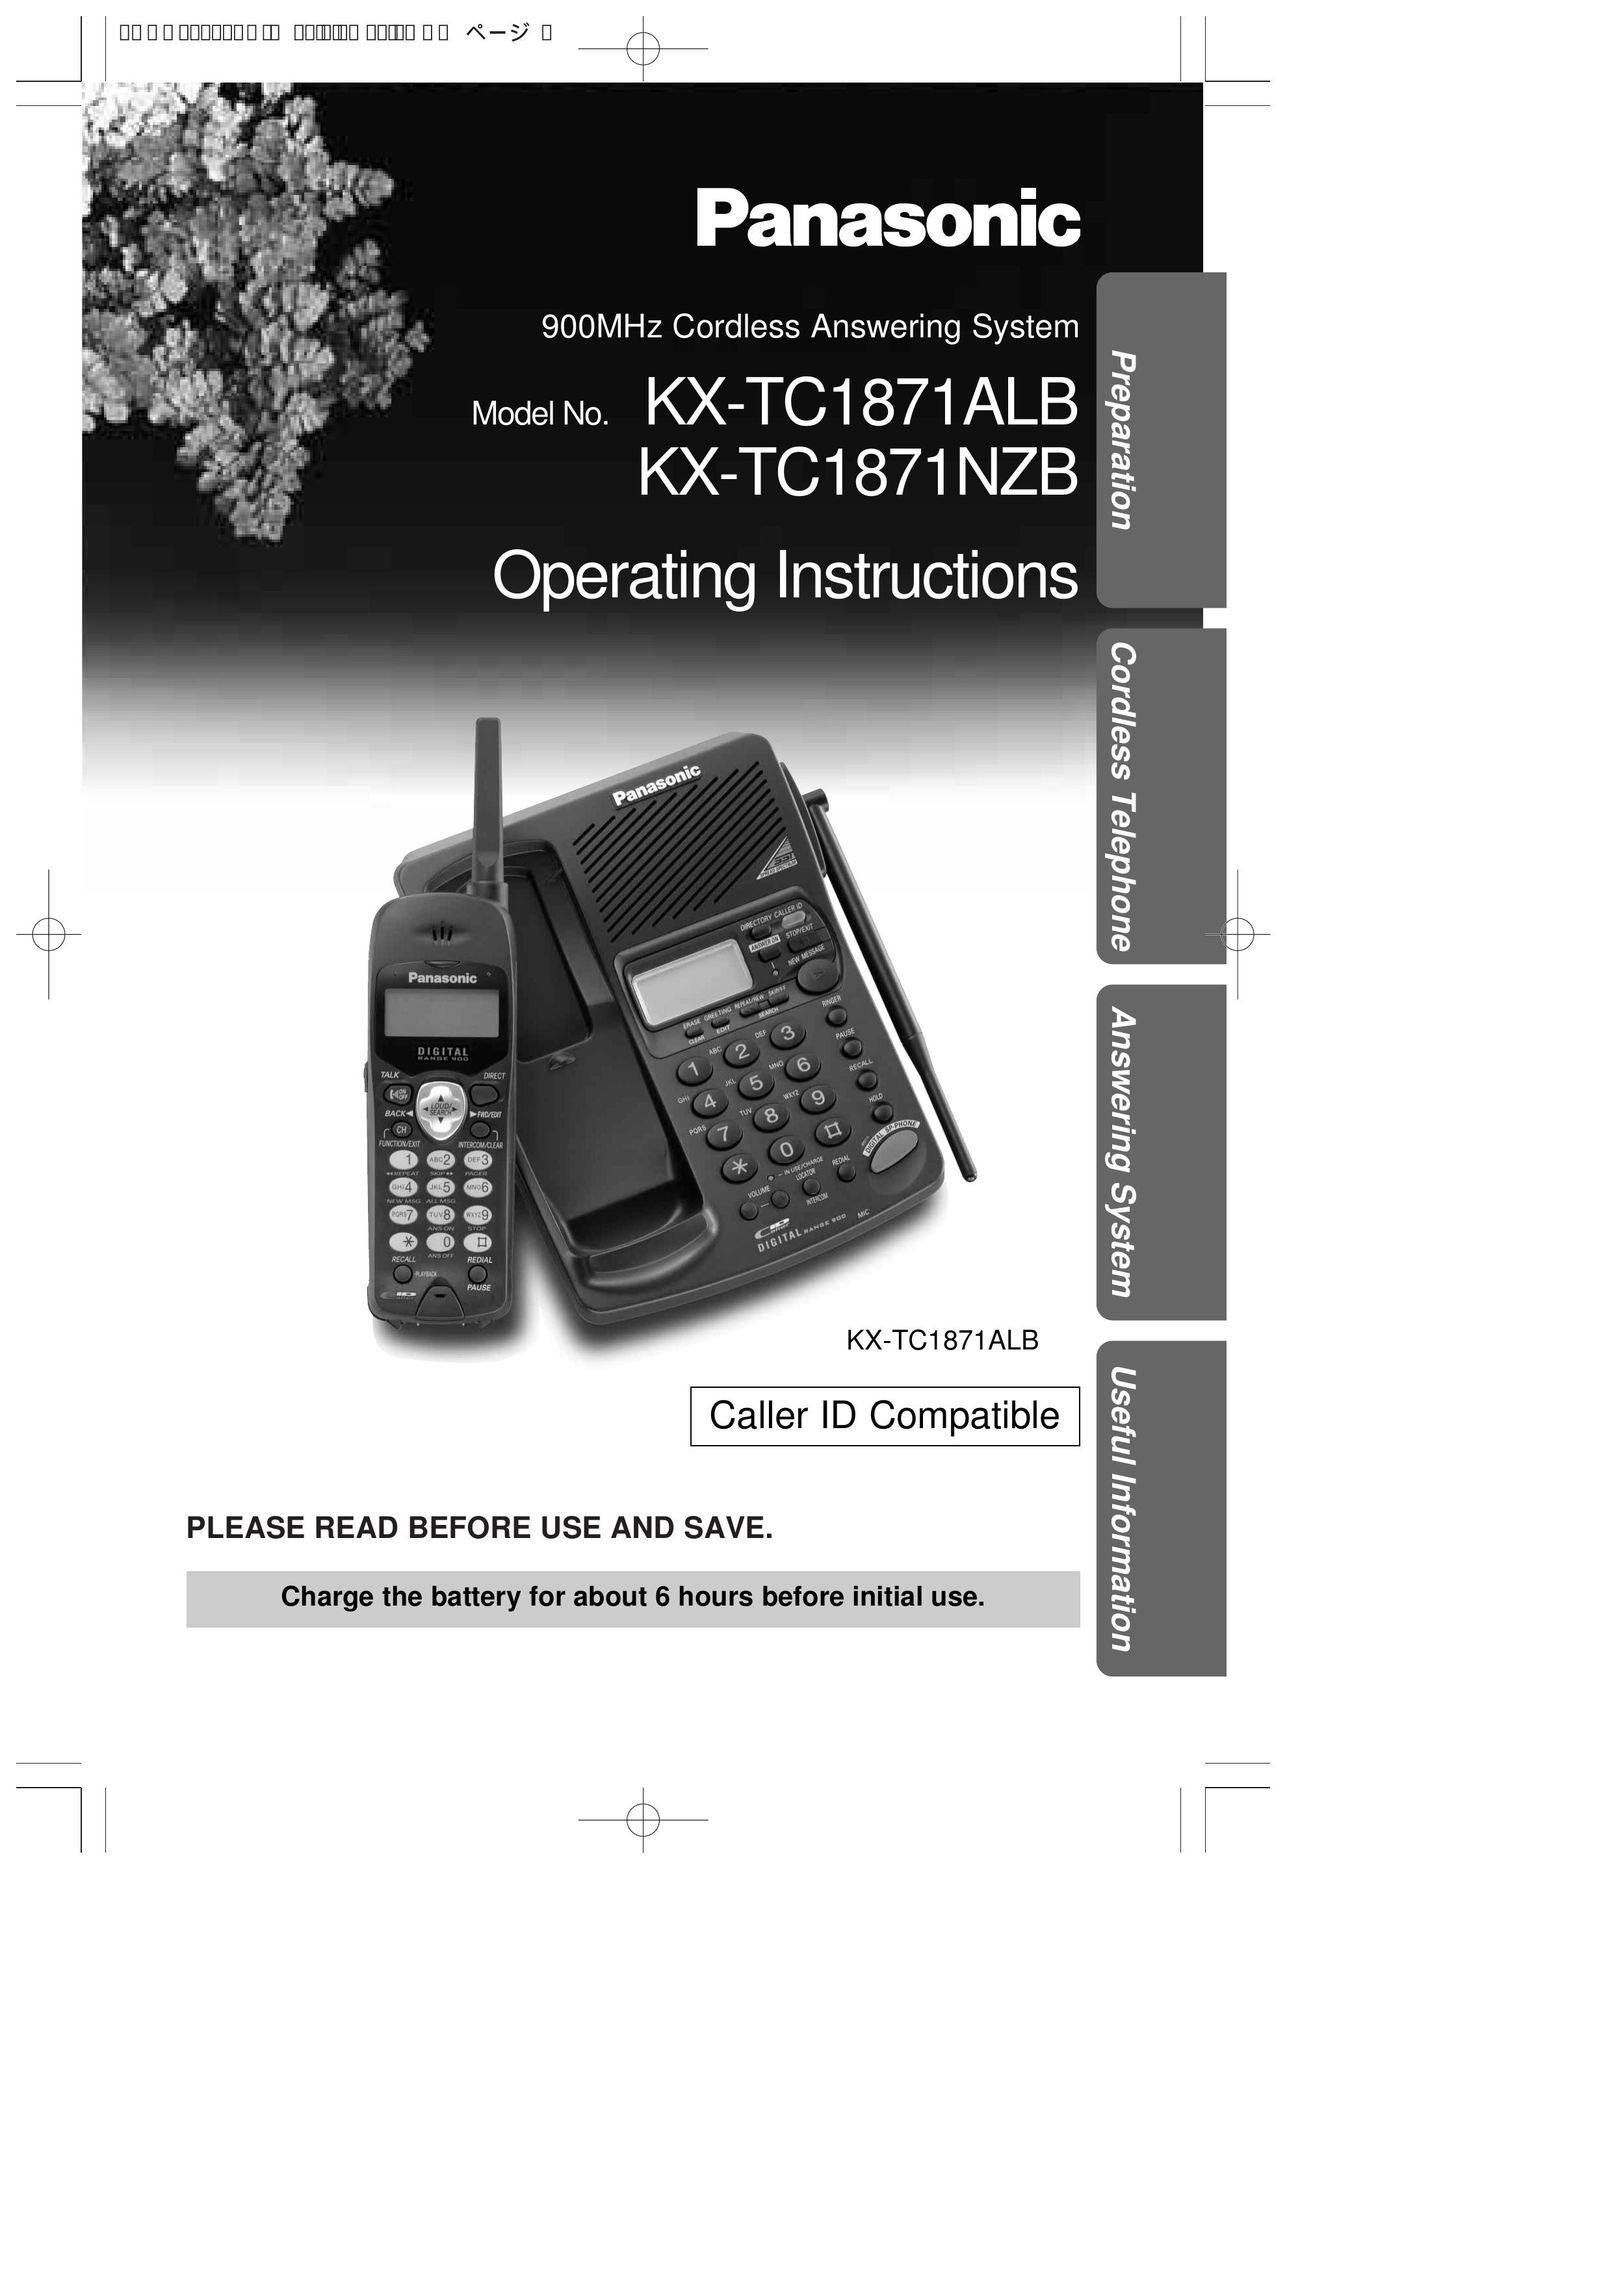 Panasonic KX-TC1871ALB Answering Machine User Manual